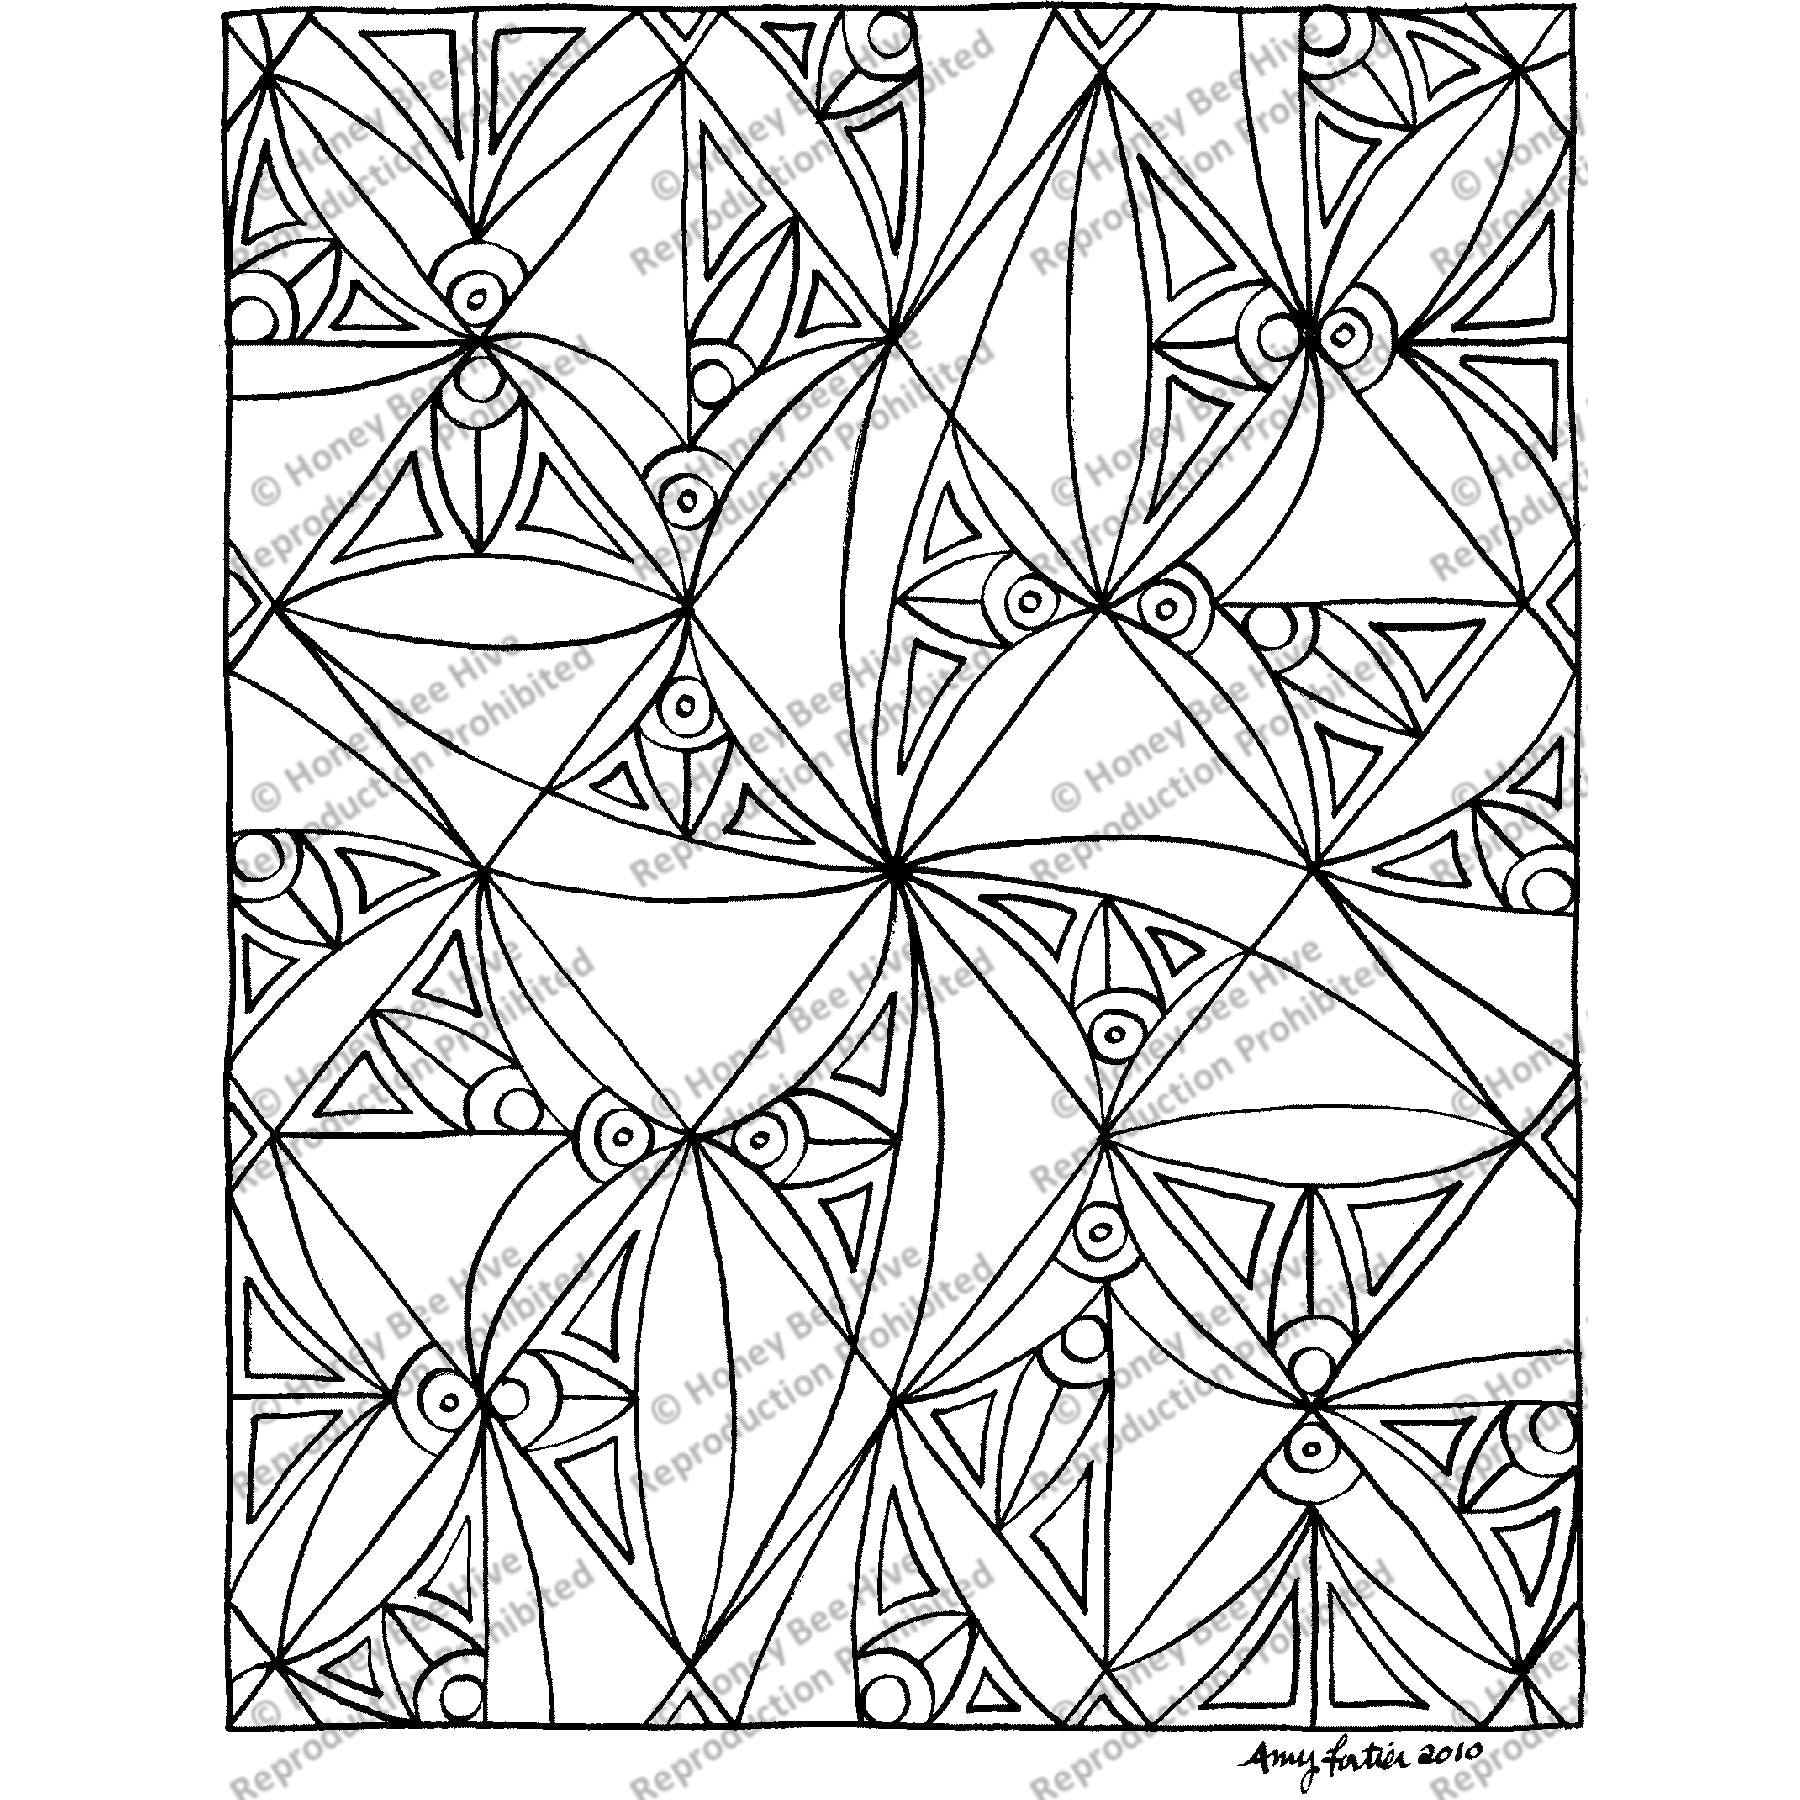 Toucan Play, rug hooking pattern